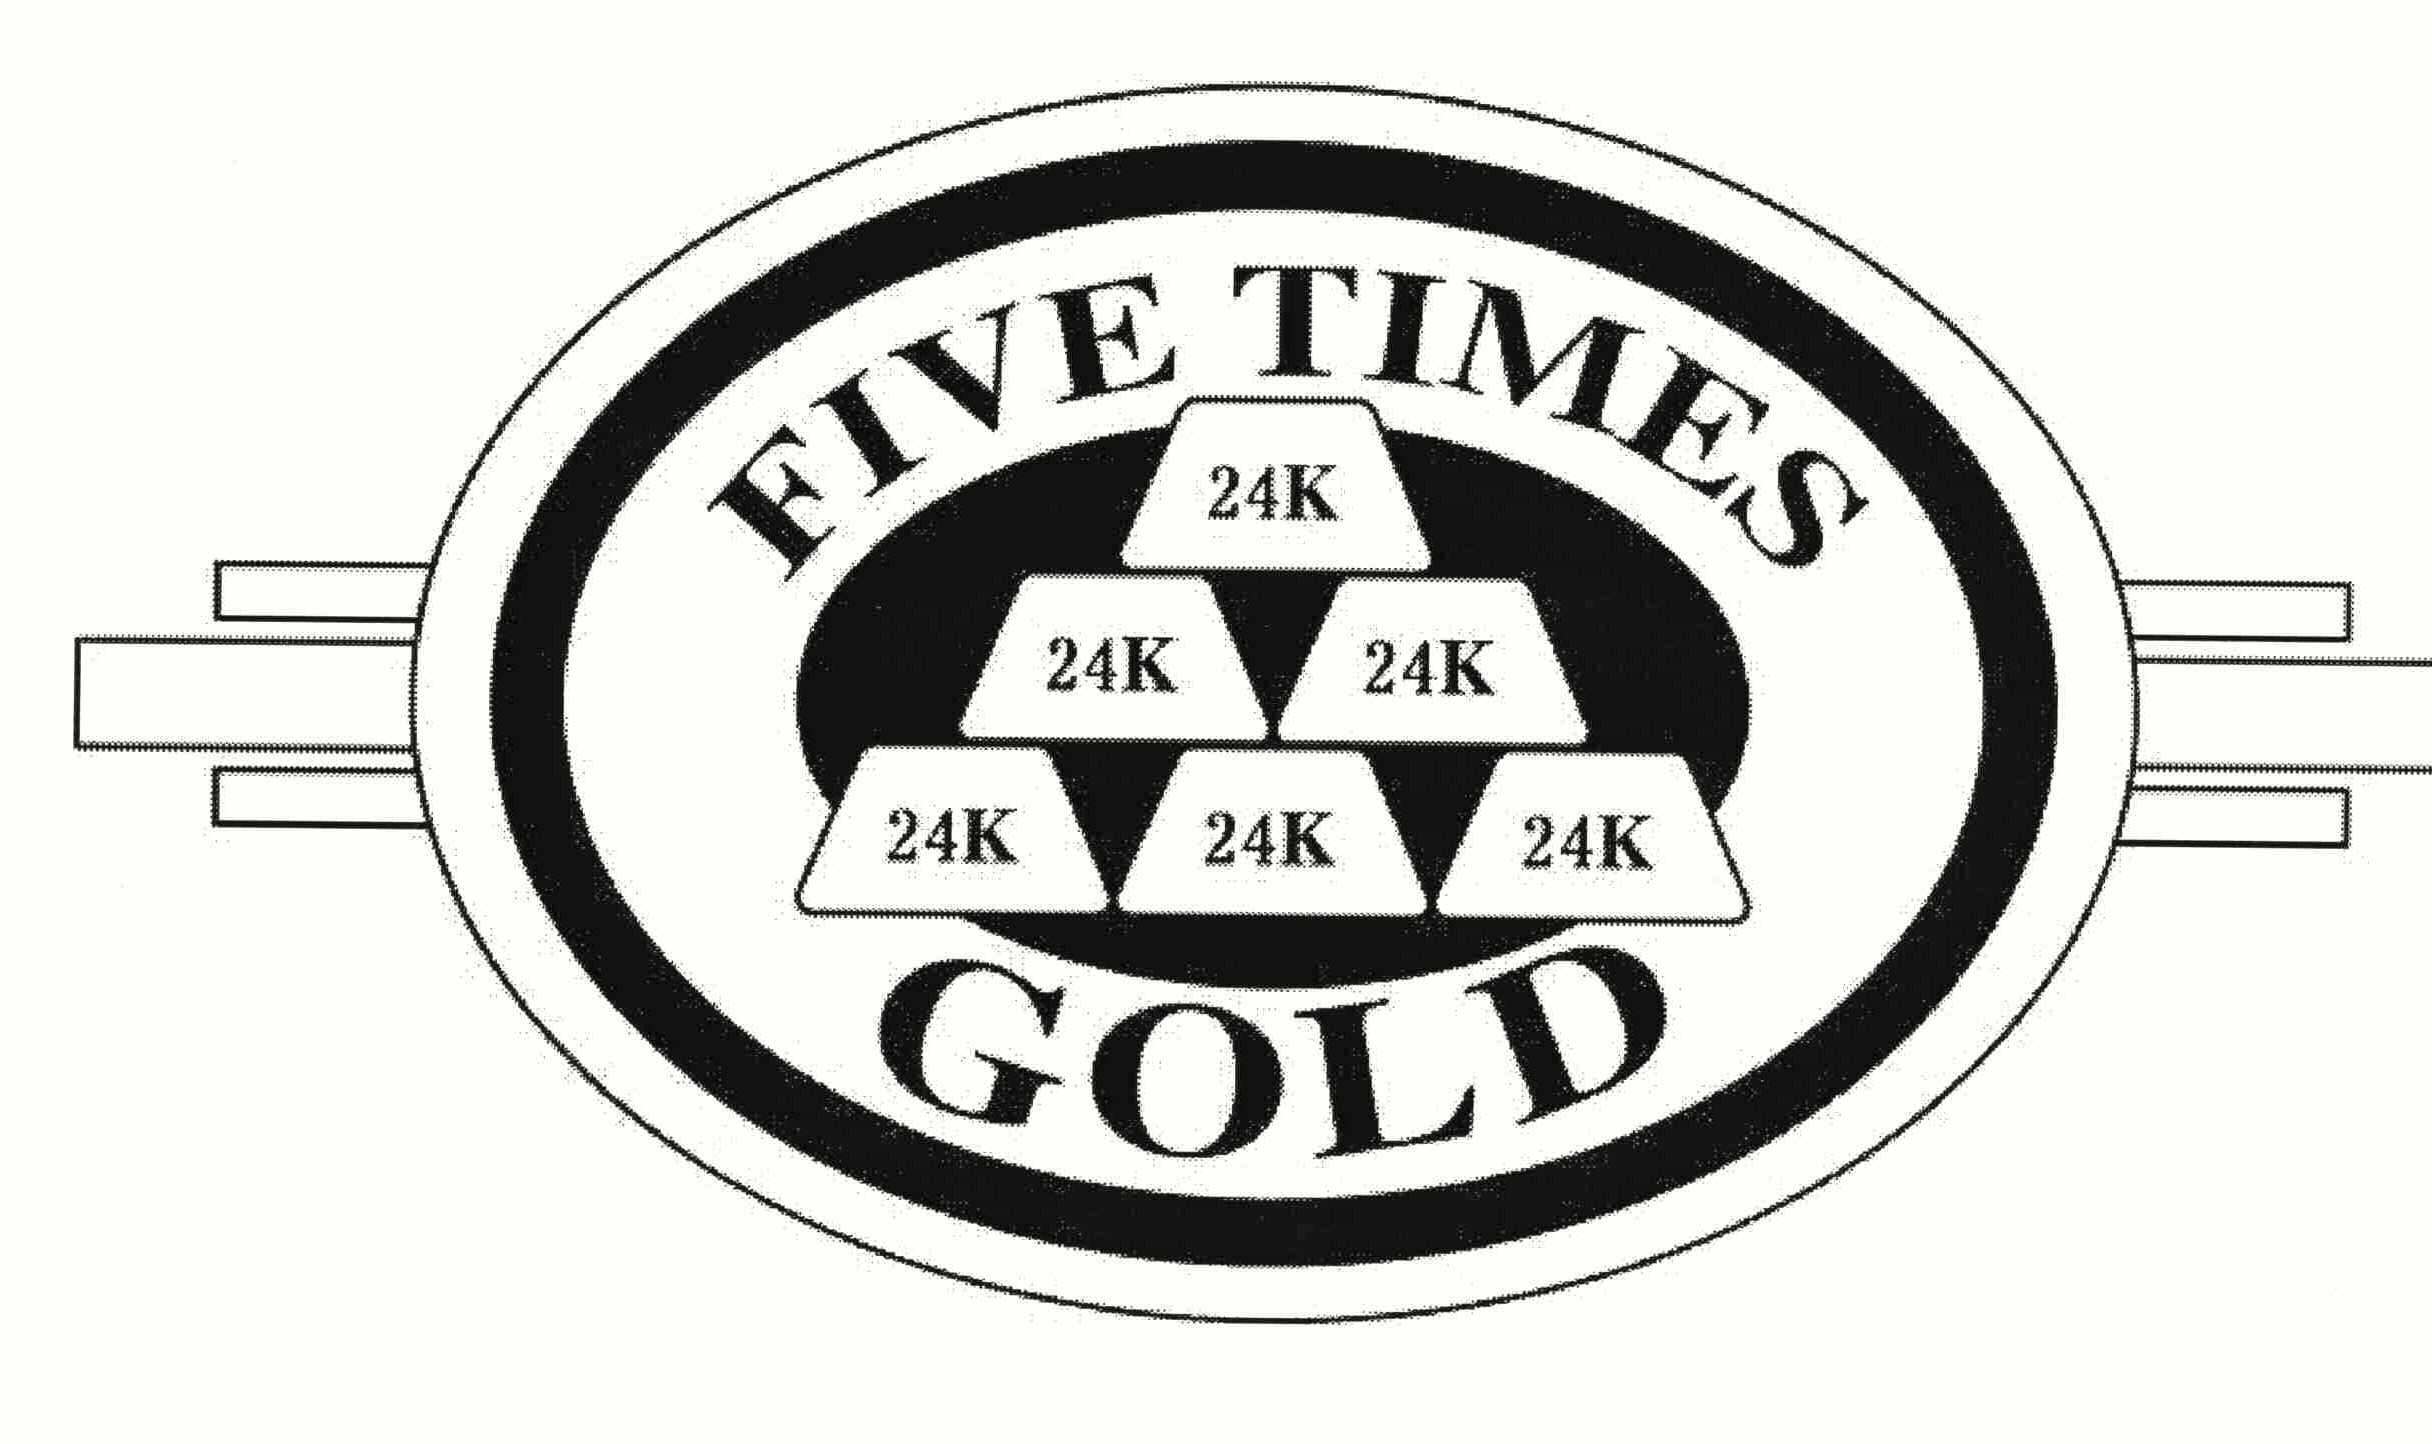  FIVE TIMES GOLD 24K